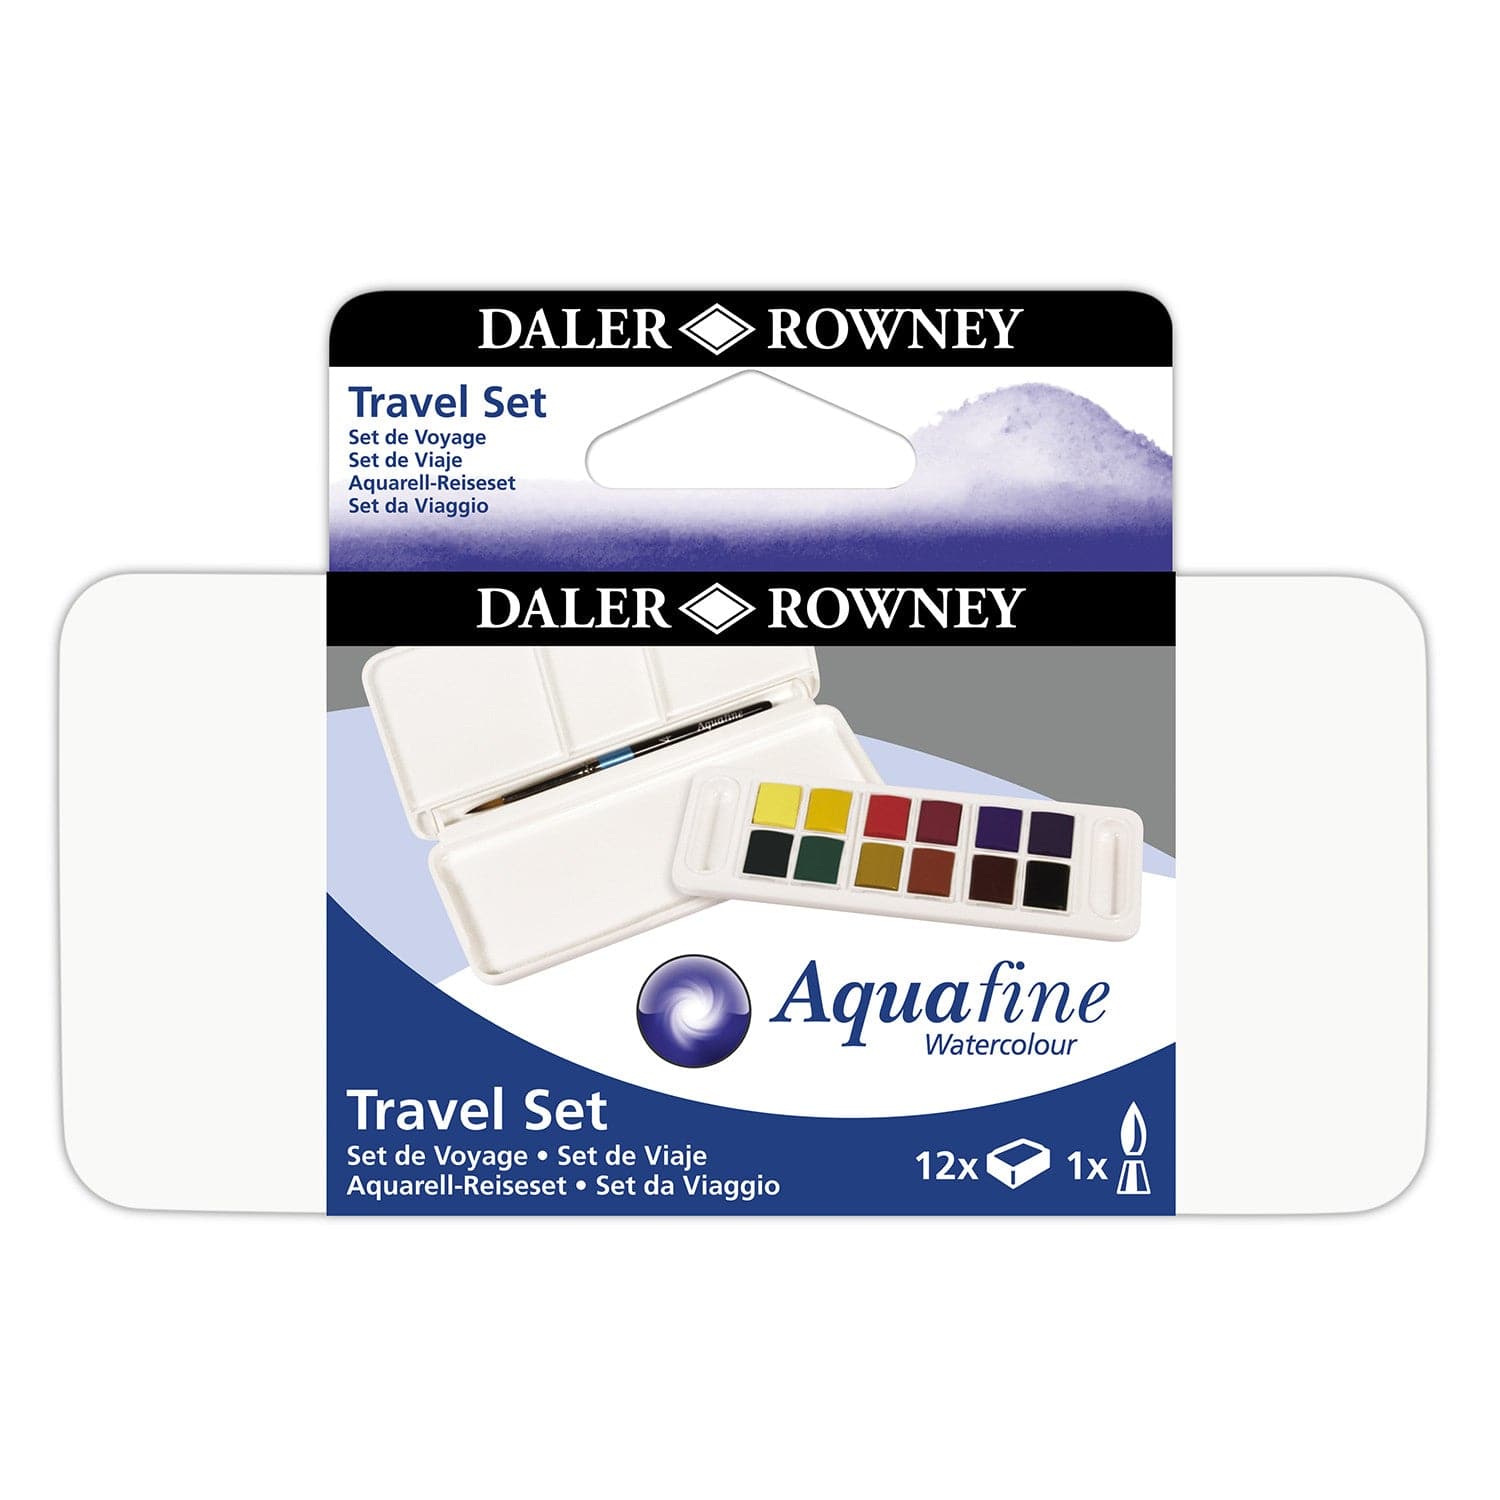 Daler Rowney Aquafine Watercolor Travel Set